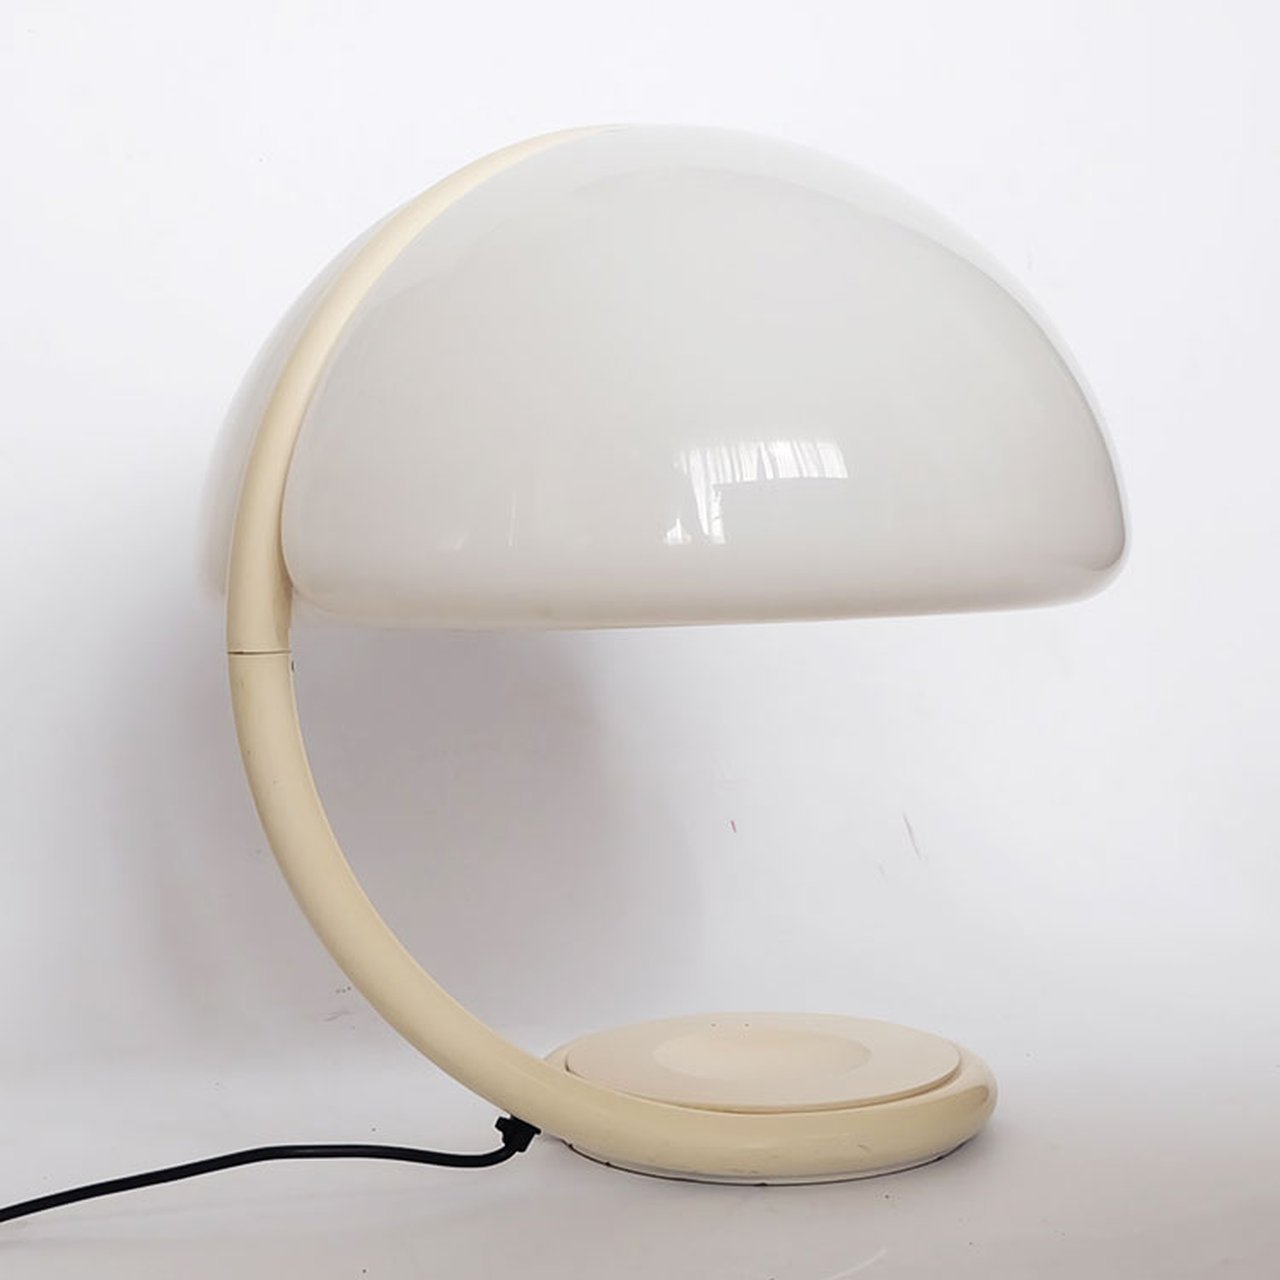 Image 11 of Design by Elio Martinelli. This design icon lamp, Serpente.